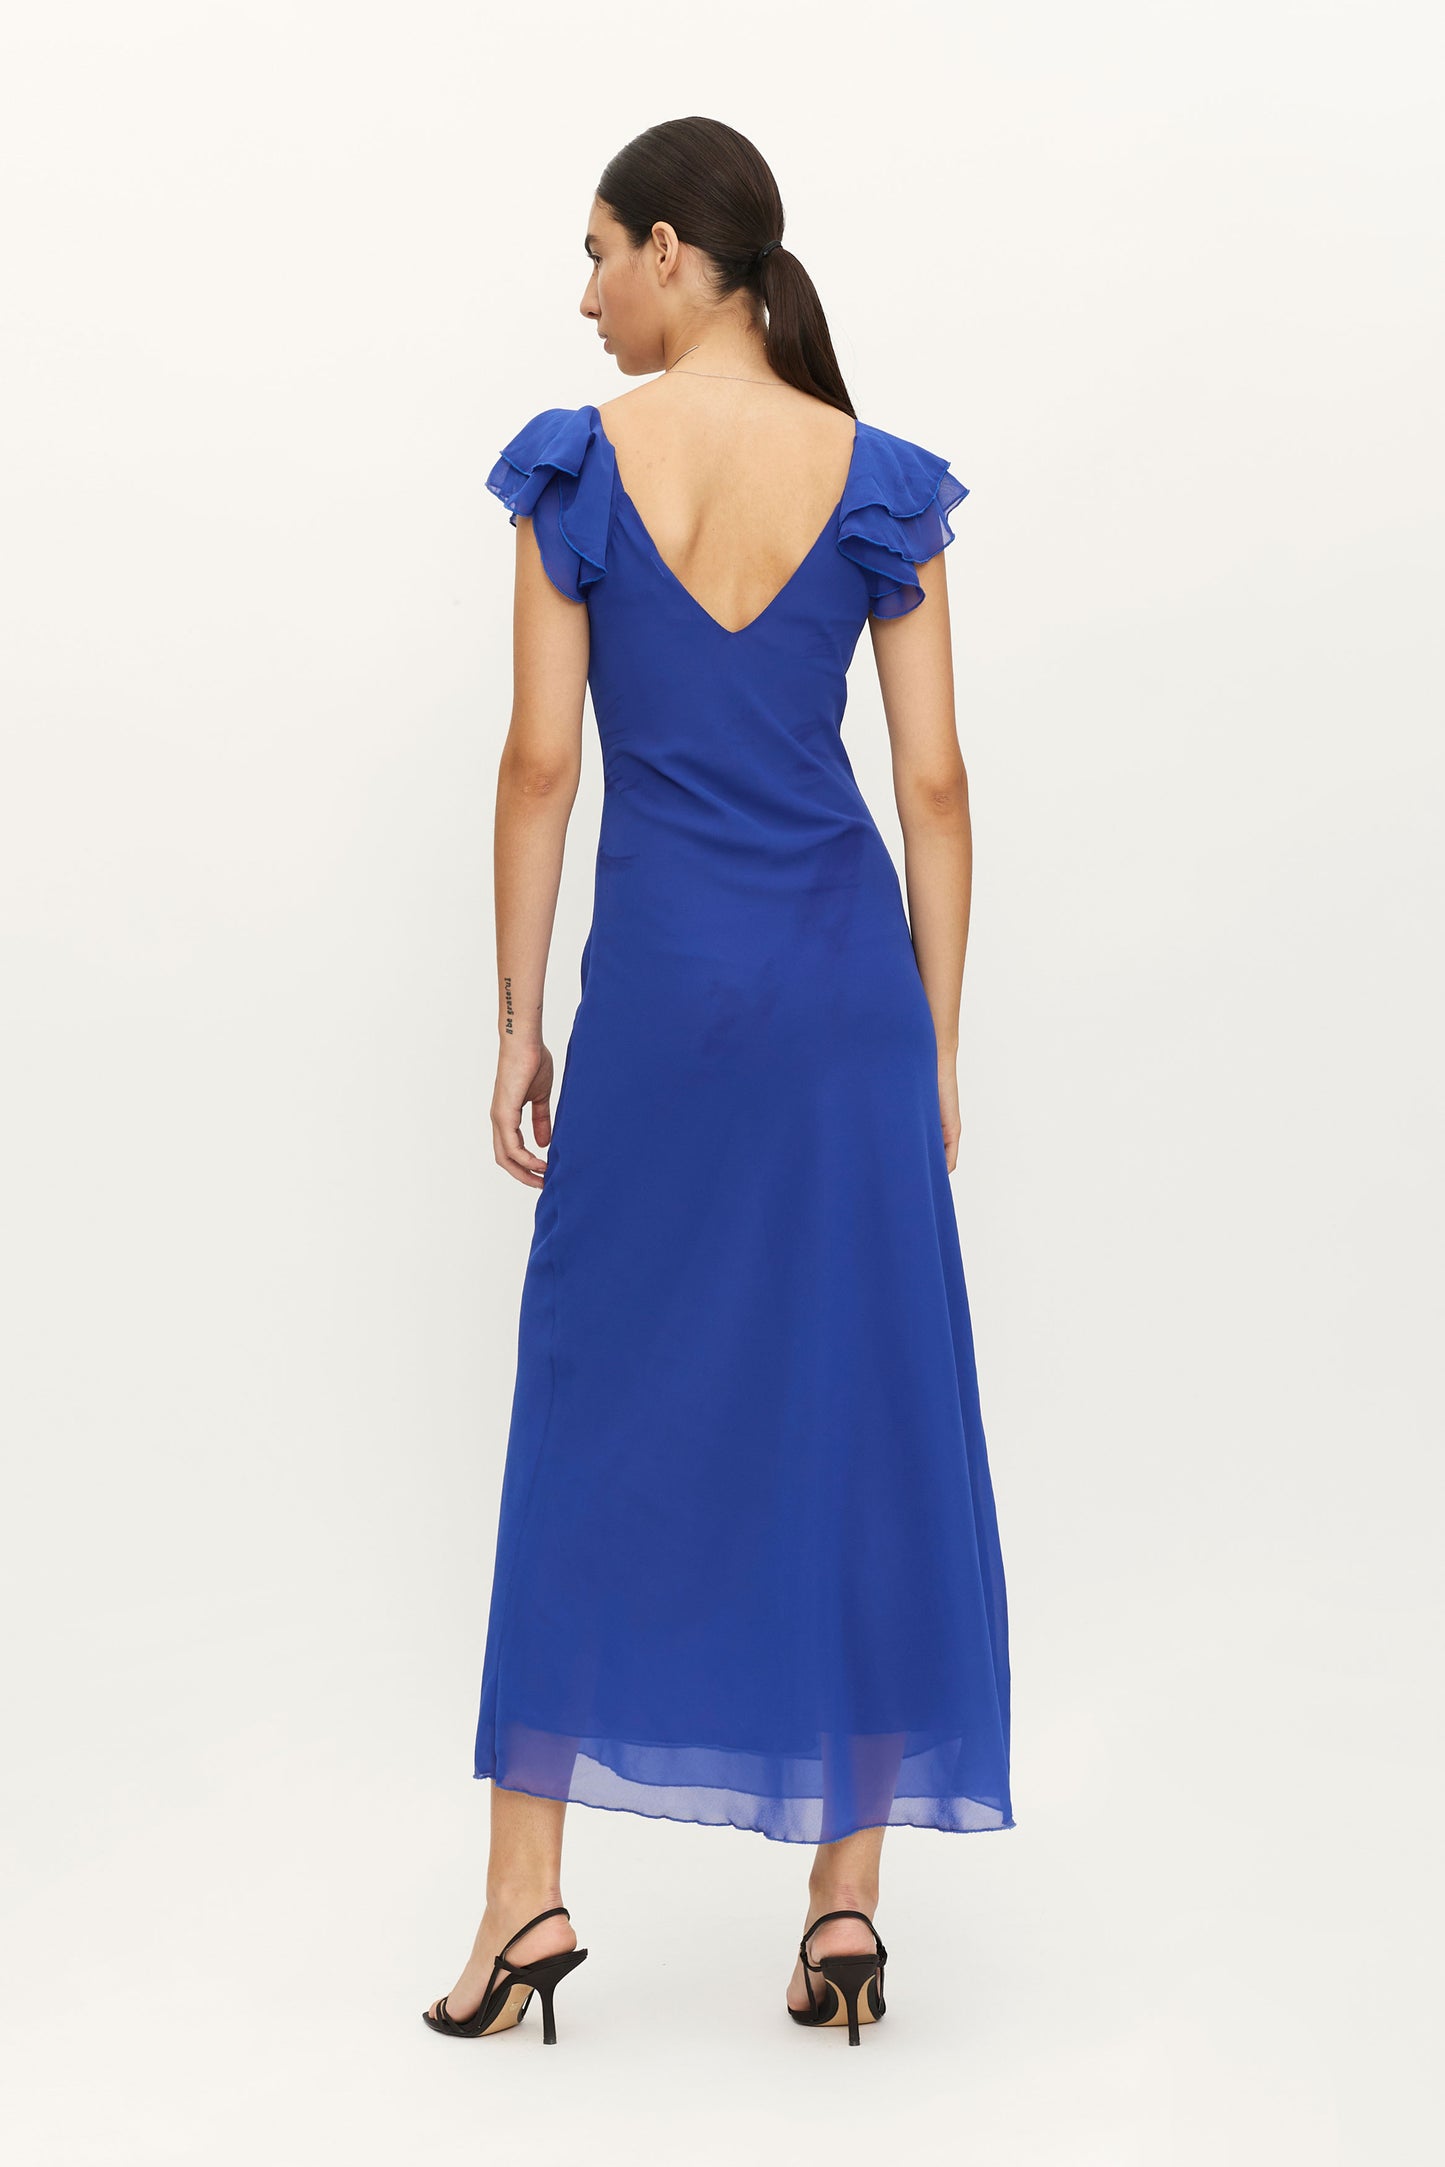 Long blue V-neck dress